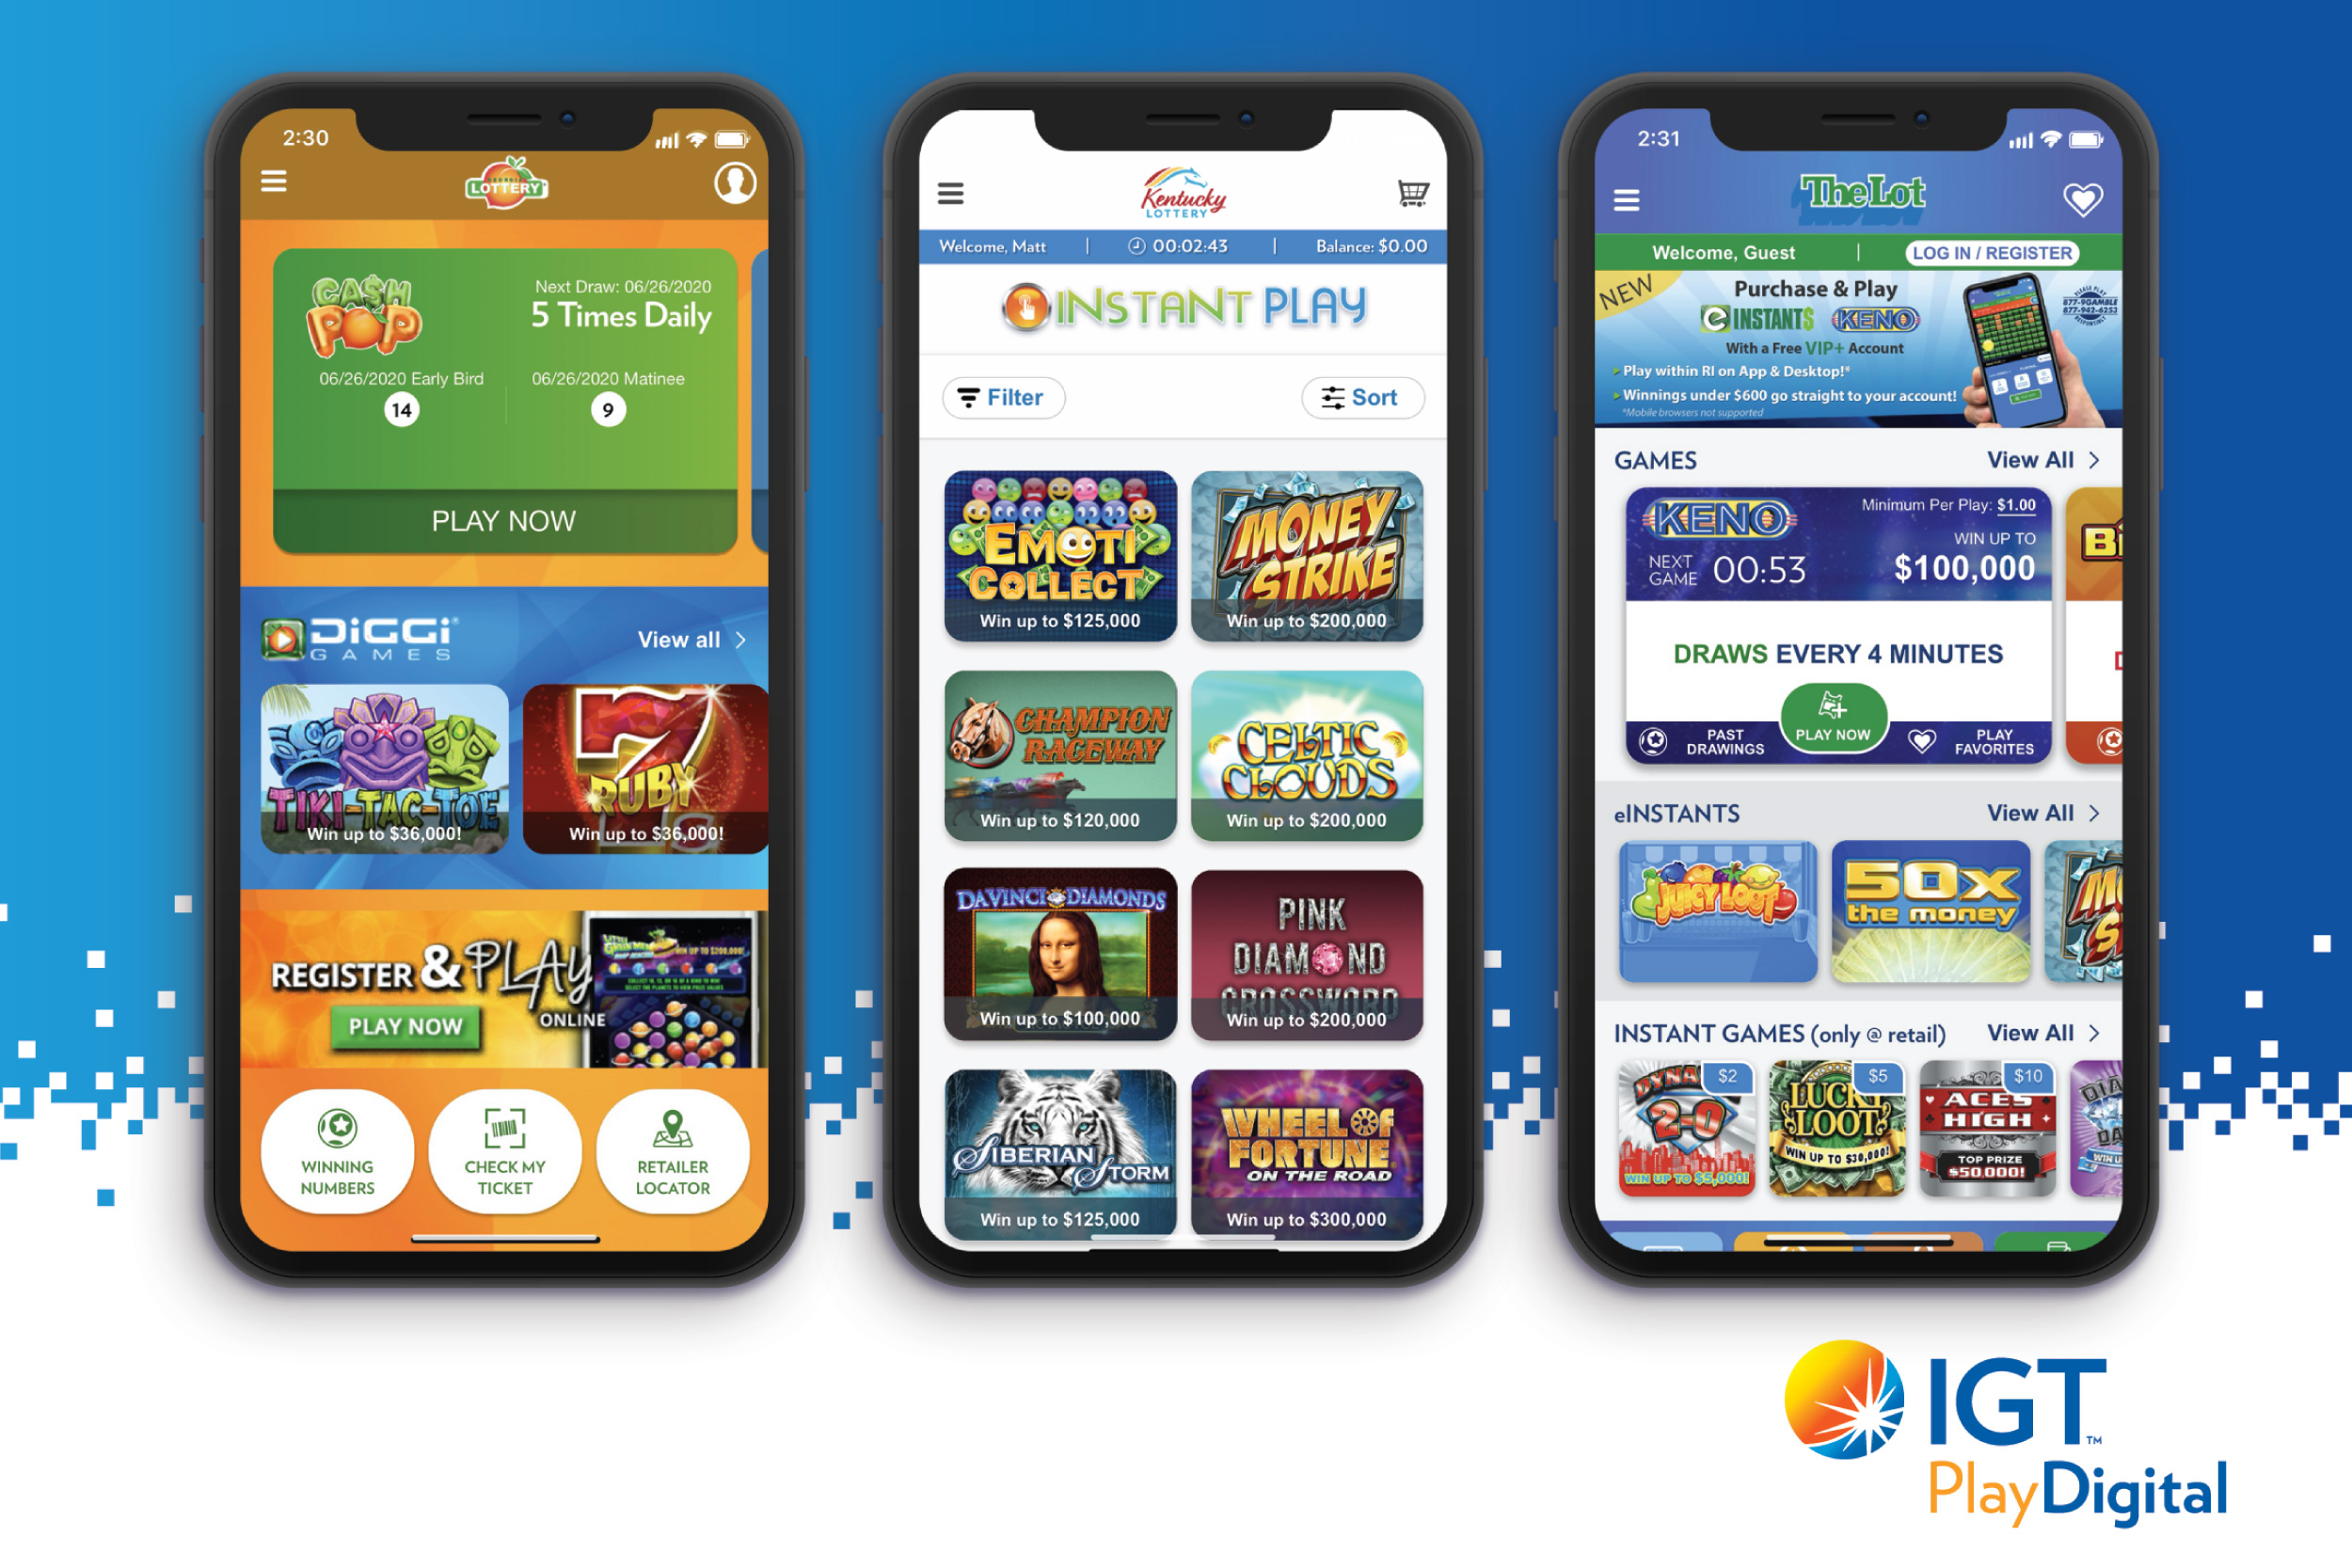 IGT PlayDigital Lottery apps